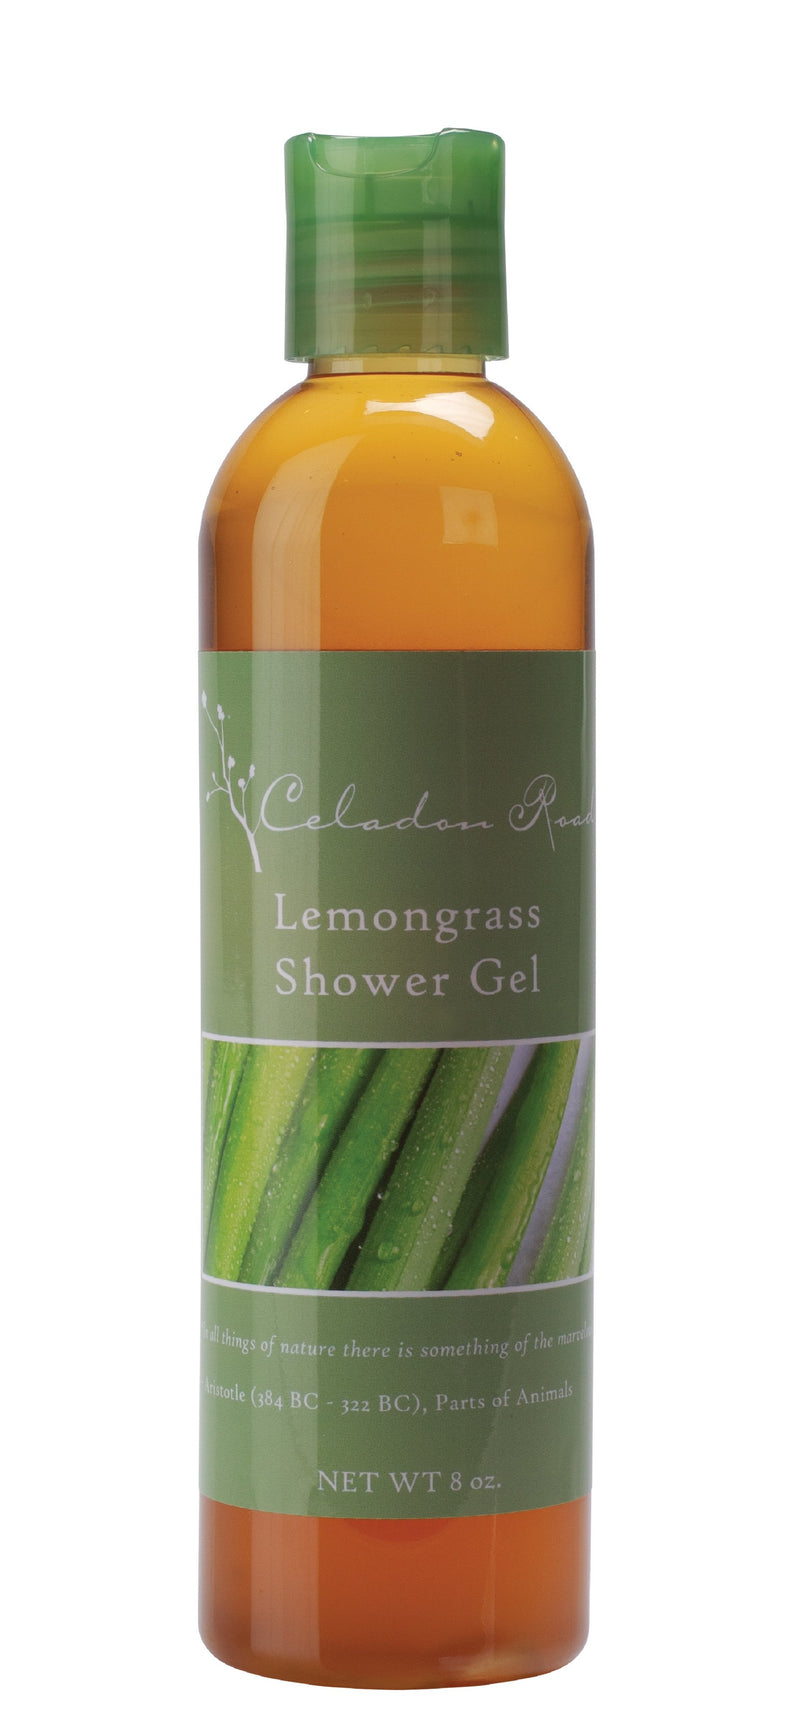 Lemongrass Shower Gel- Celadon Road- www.celadonroad.com